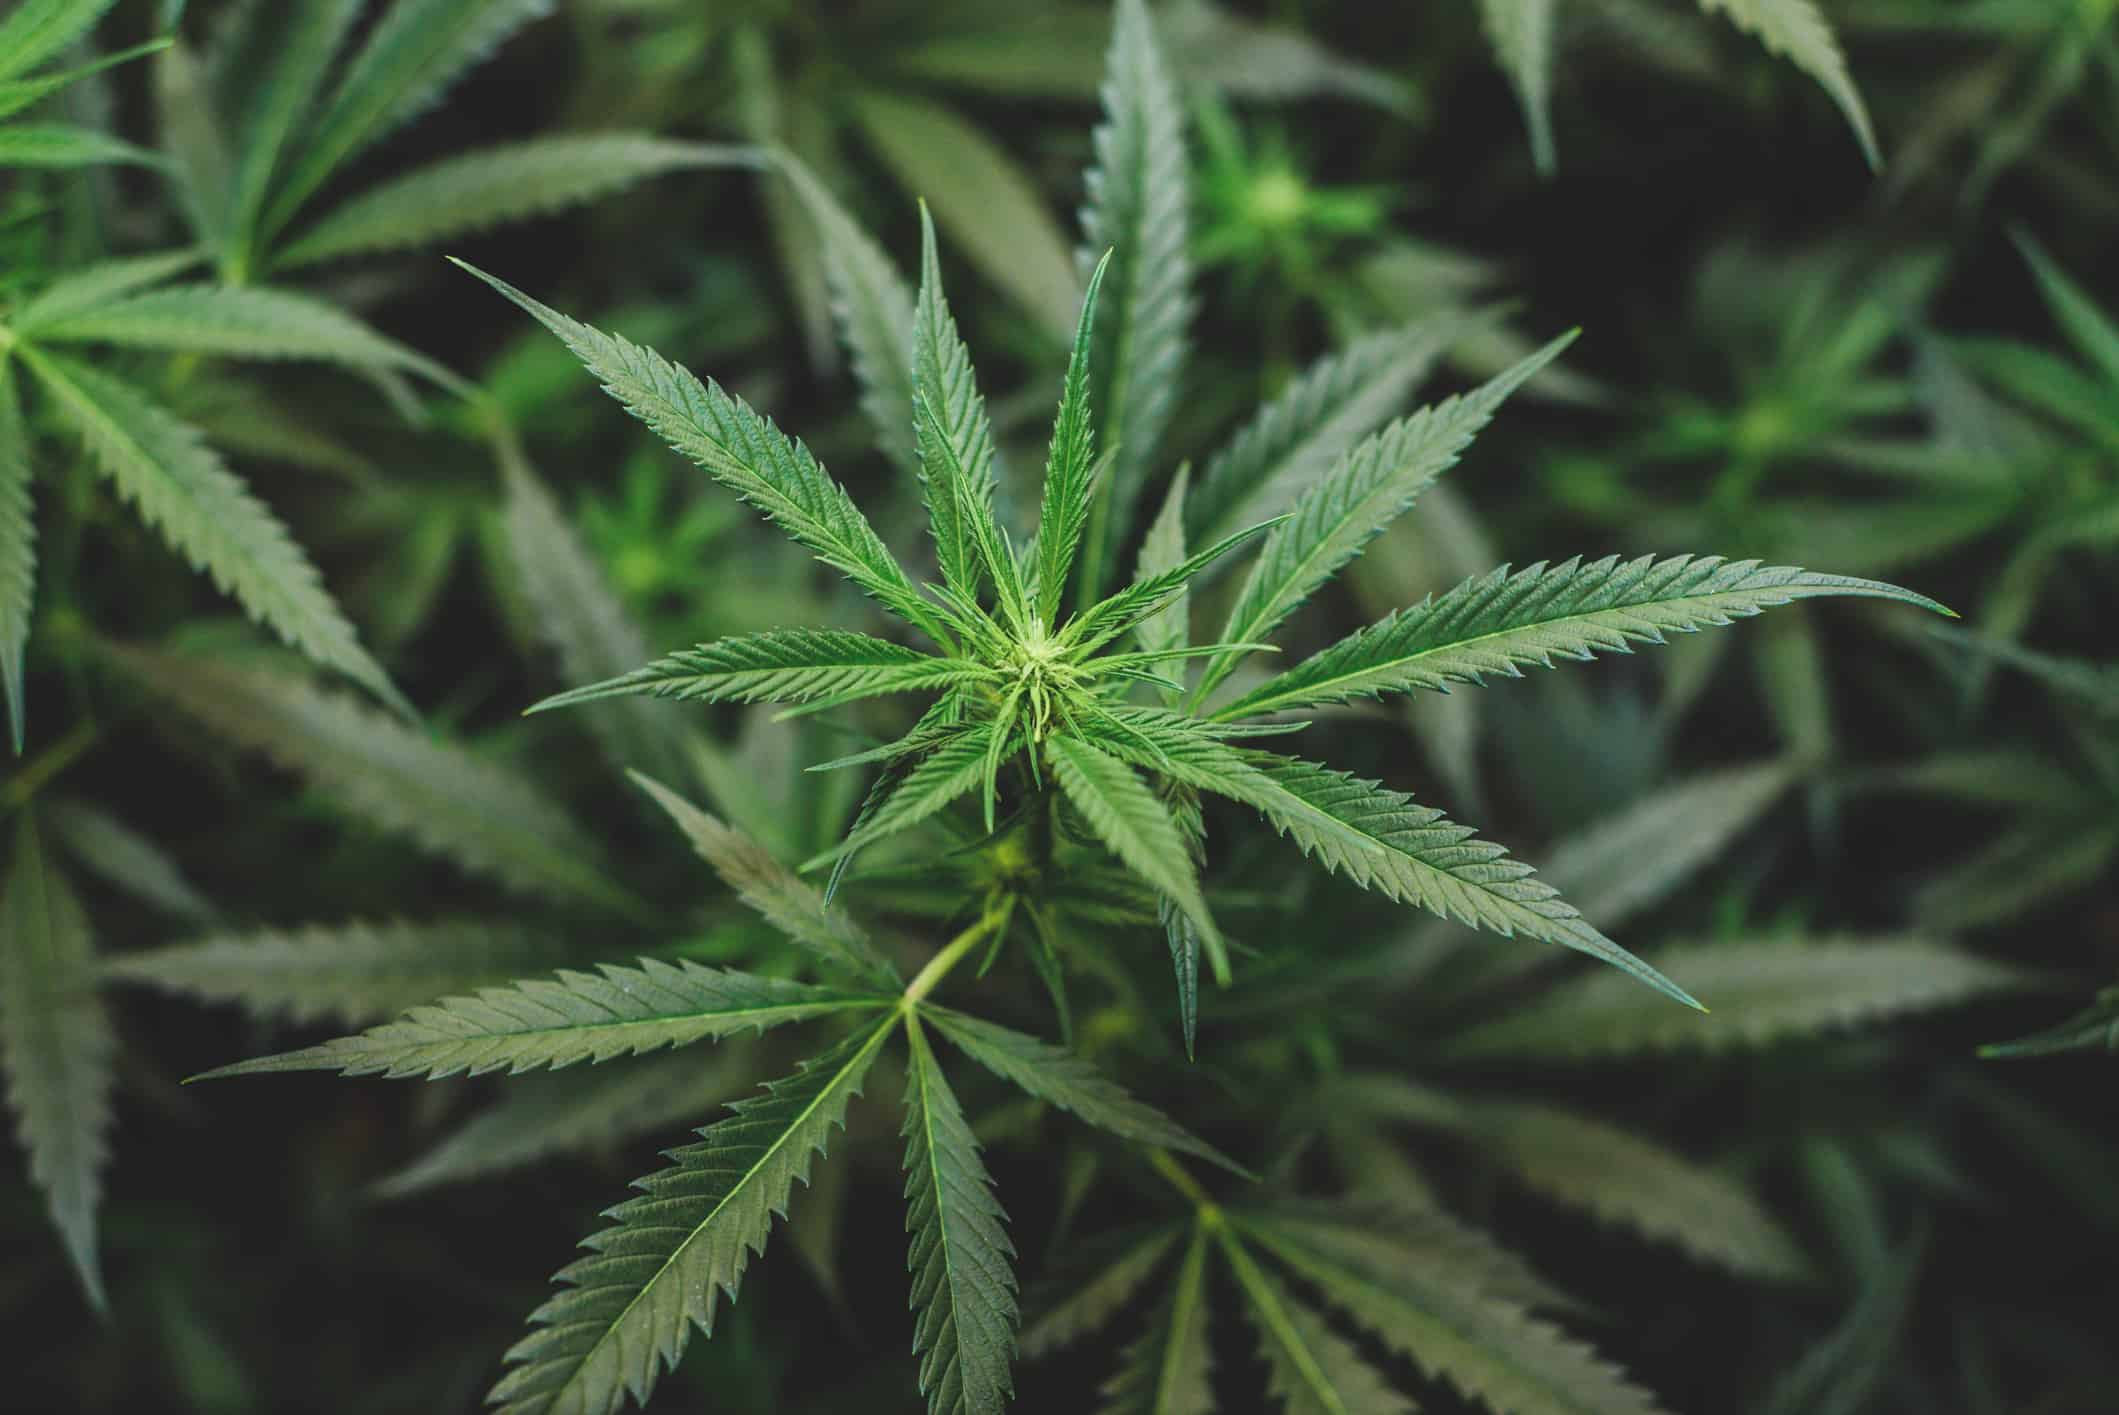 Can Cannabis Help Prevent COVID-19?